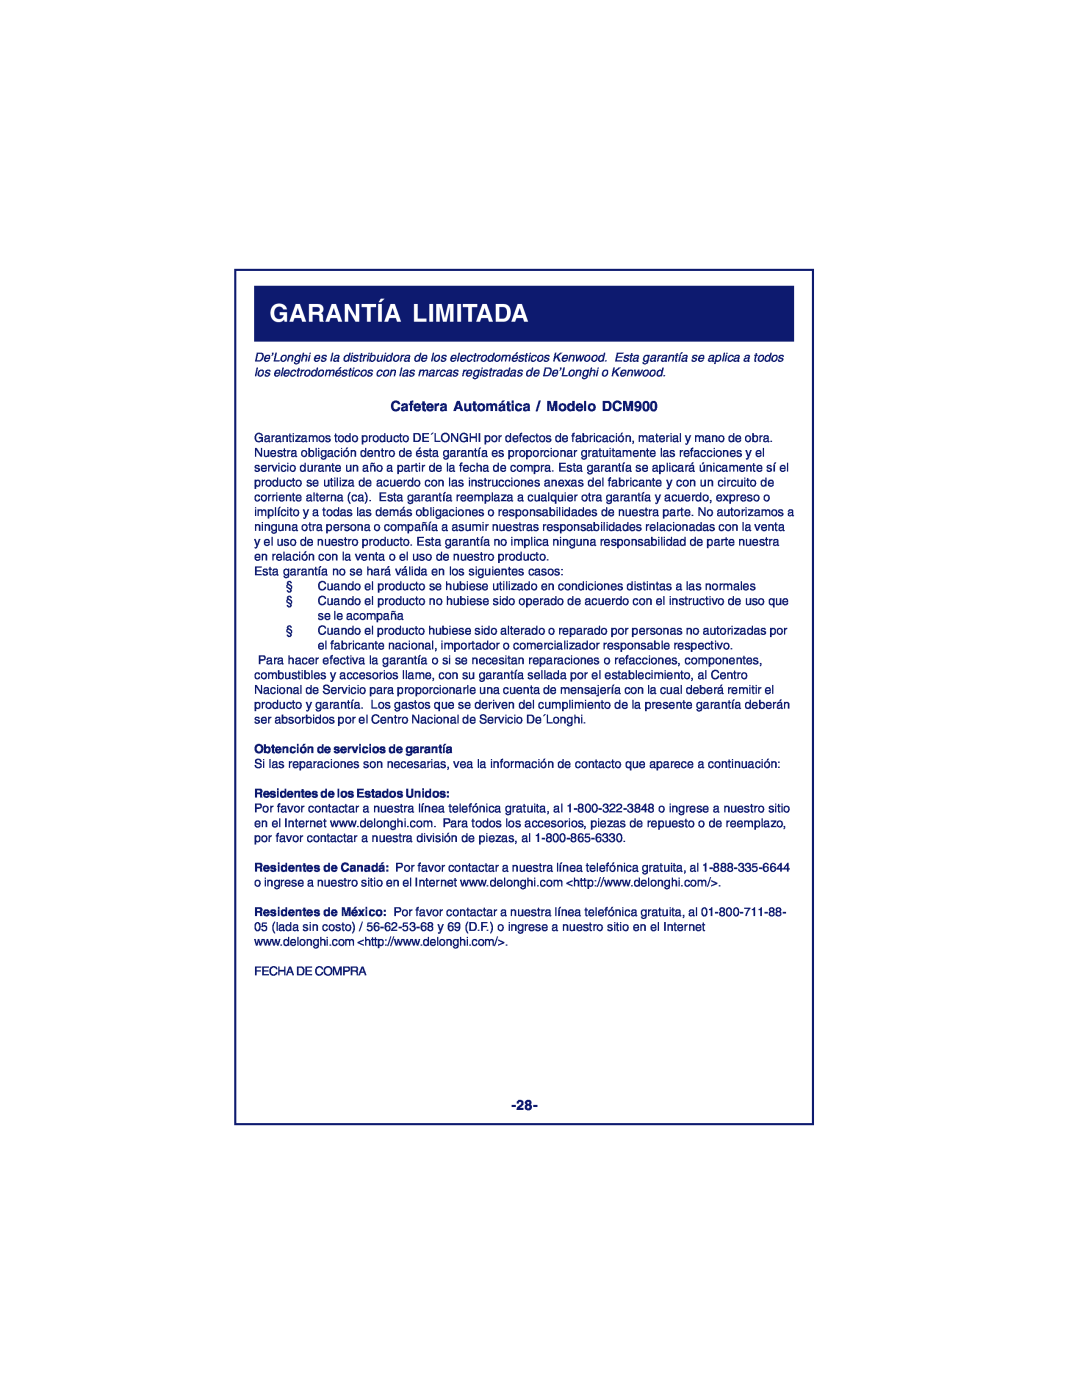 DeLonghi instruction manual Garantía Limitada, Cafetera Automática / Modelo DCM900, Obtención de servicios de garantía 